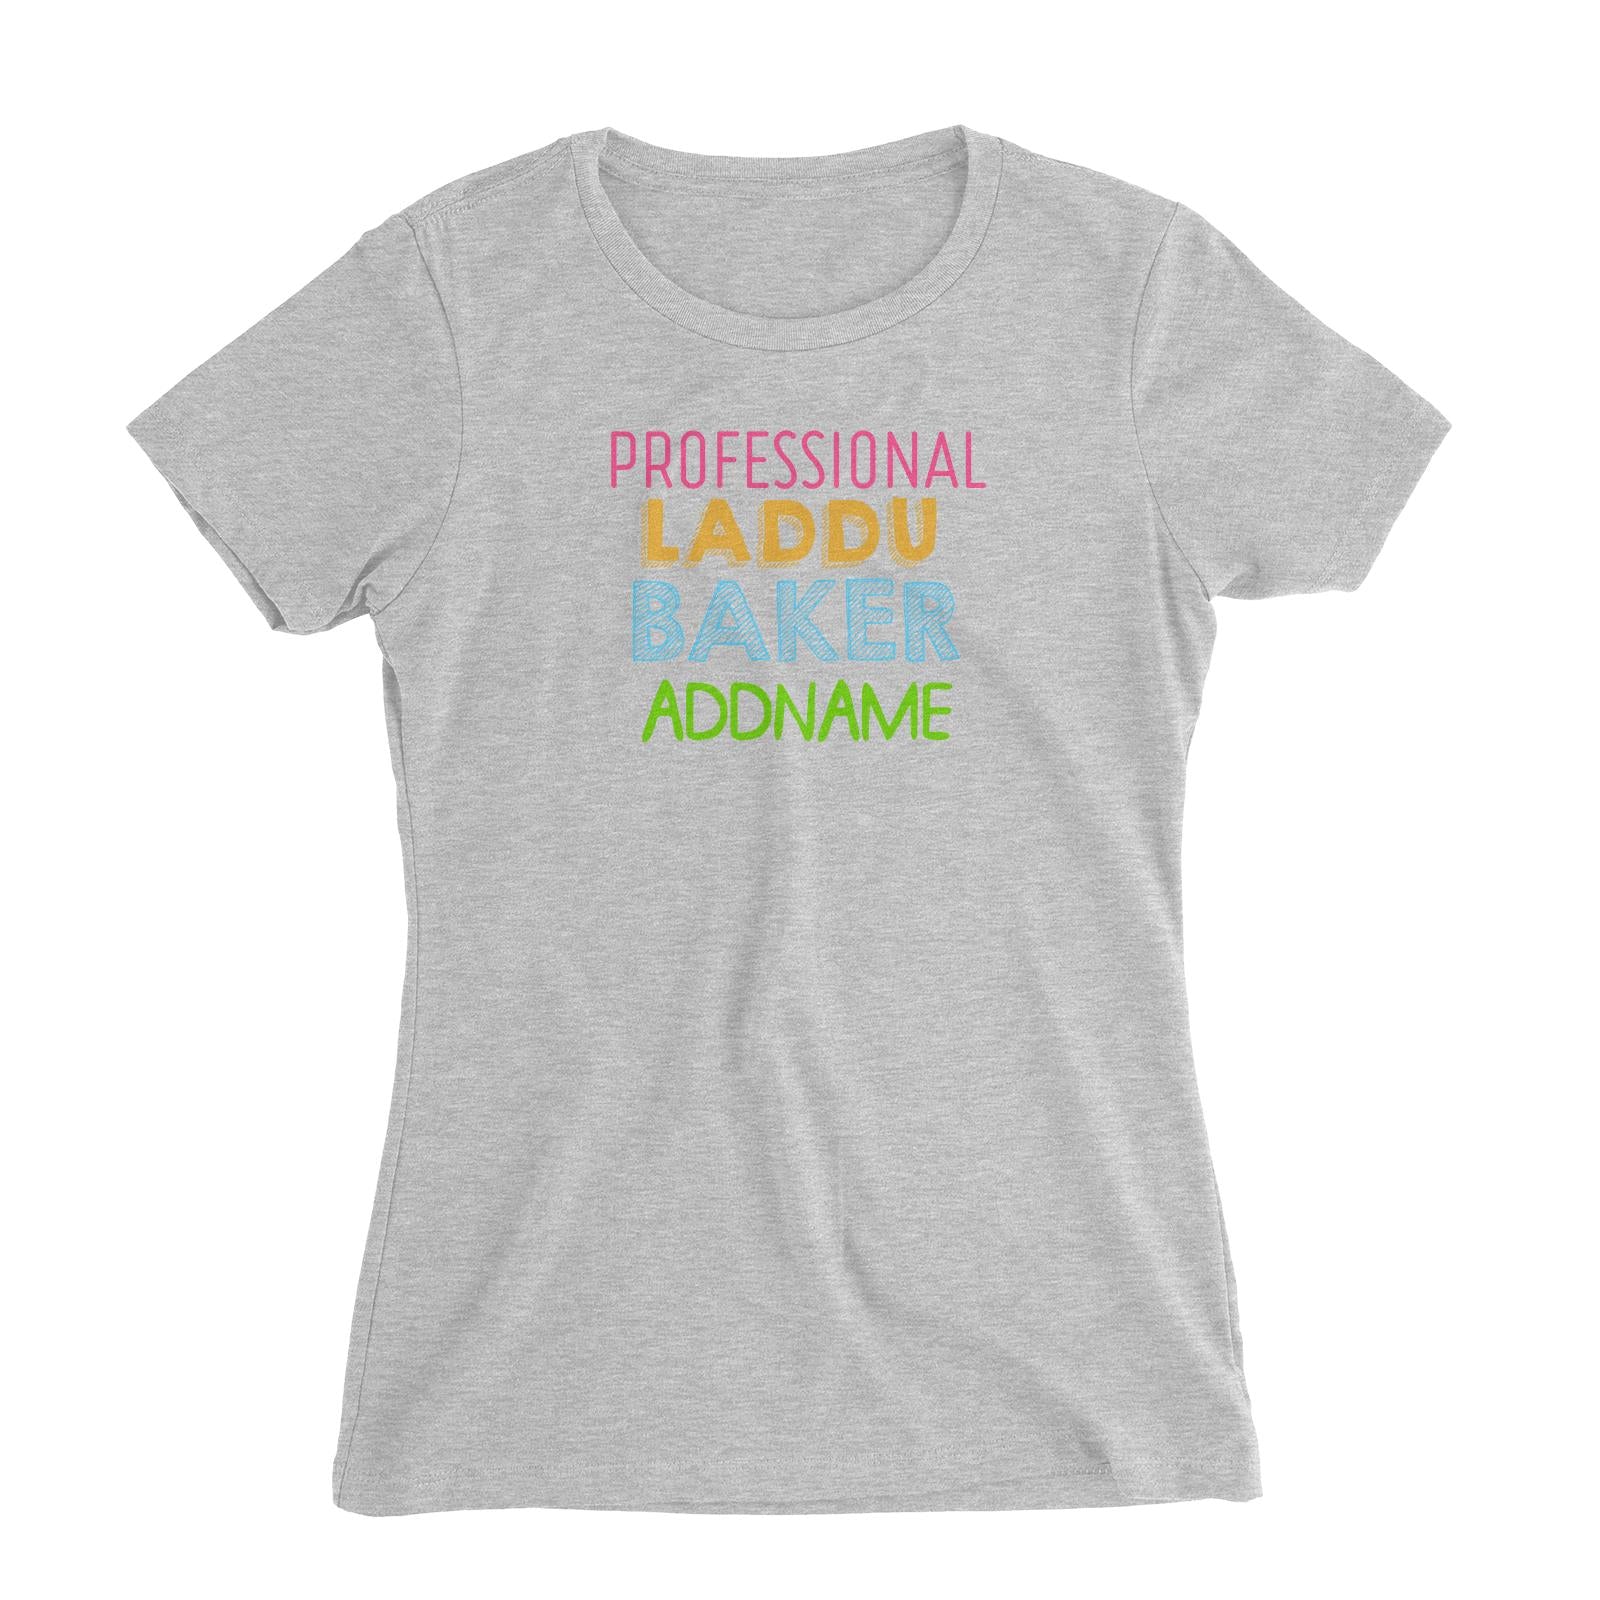 Professional Laddu Baker Addname Women's Slim Fit T-Shirt